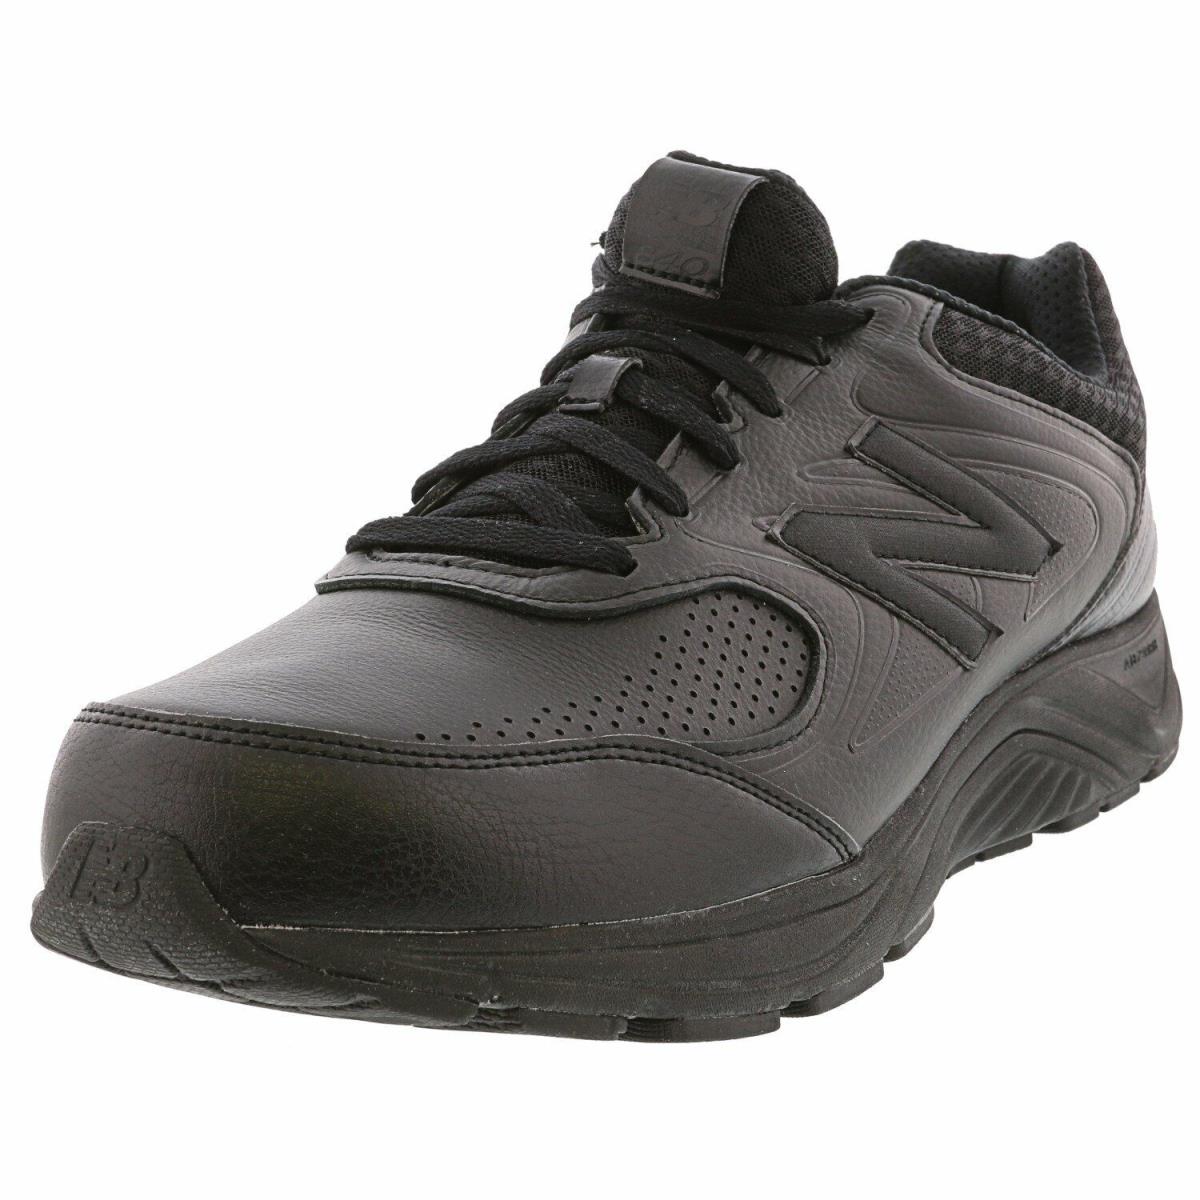 Balance 840 Women`s Walking Shoes Black Size 7 Width B - Medium